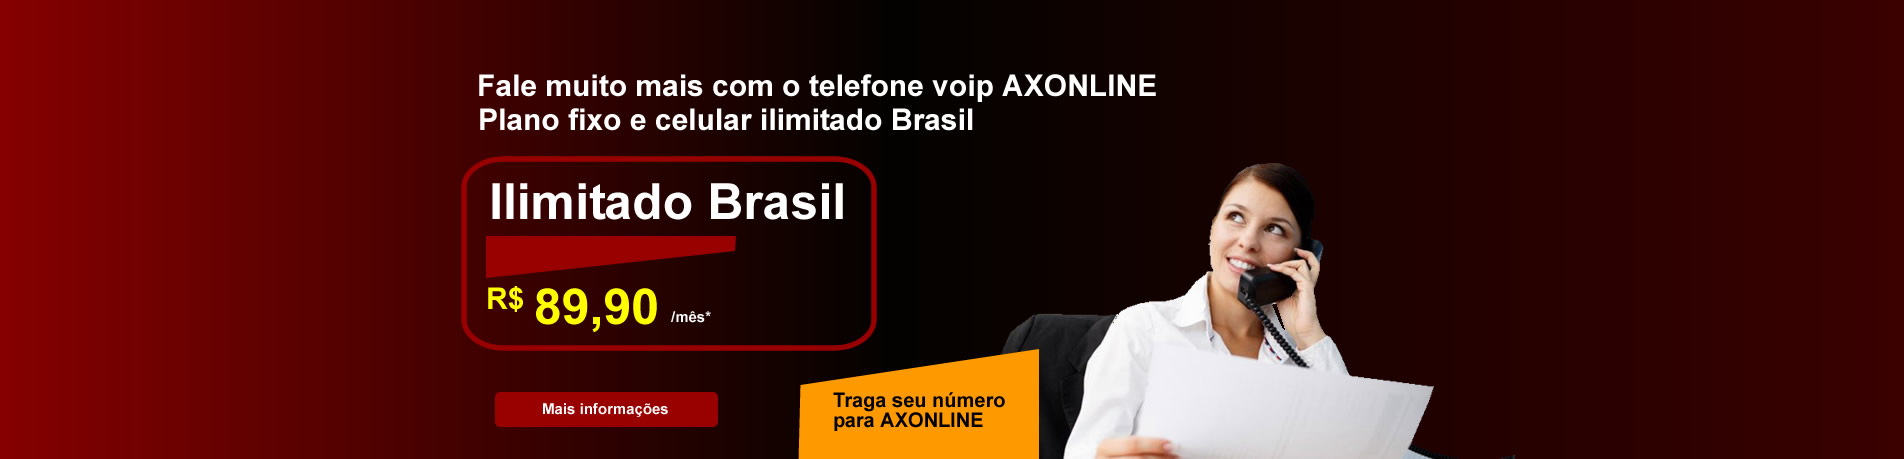 axonline banner full 1904x459 ilimitado brasil